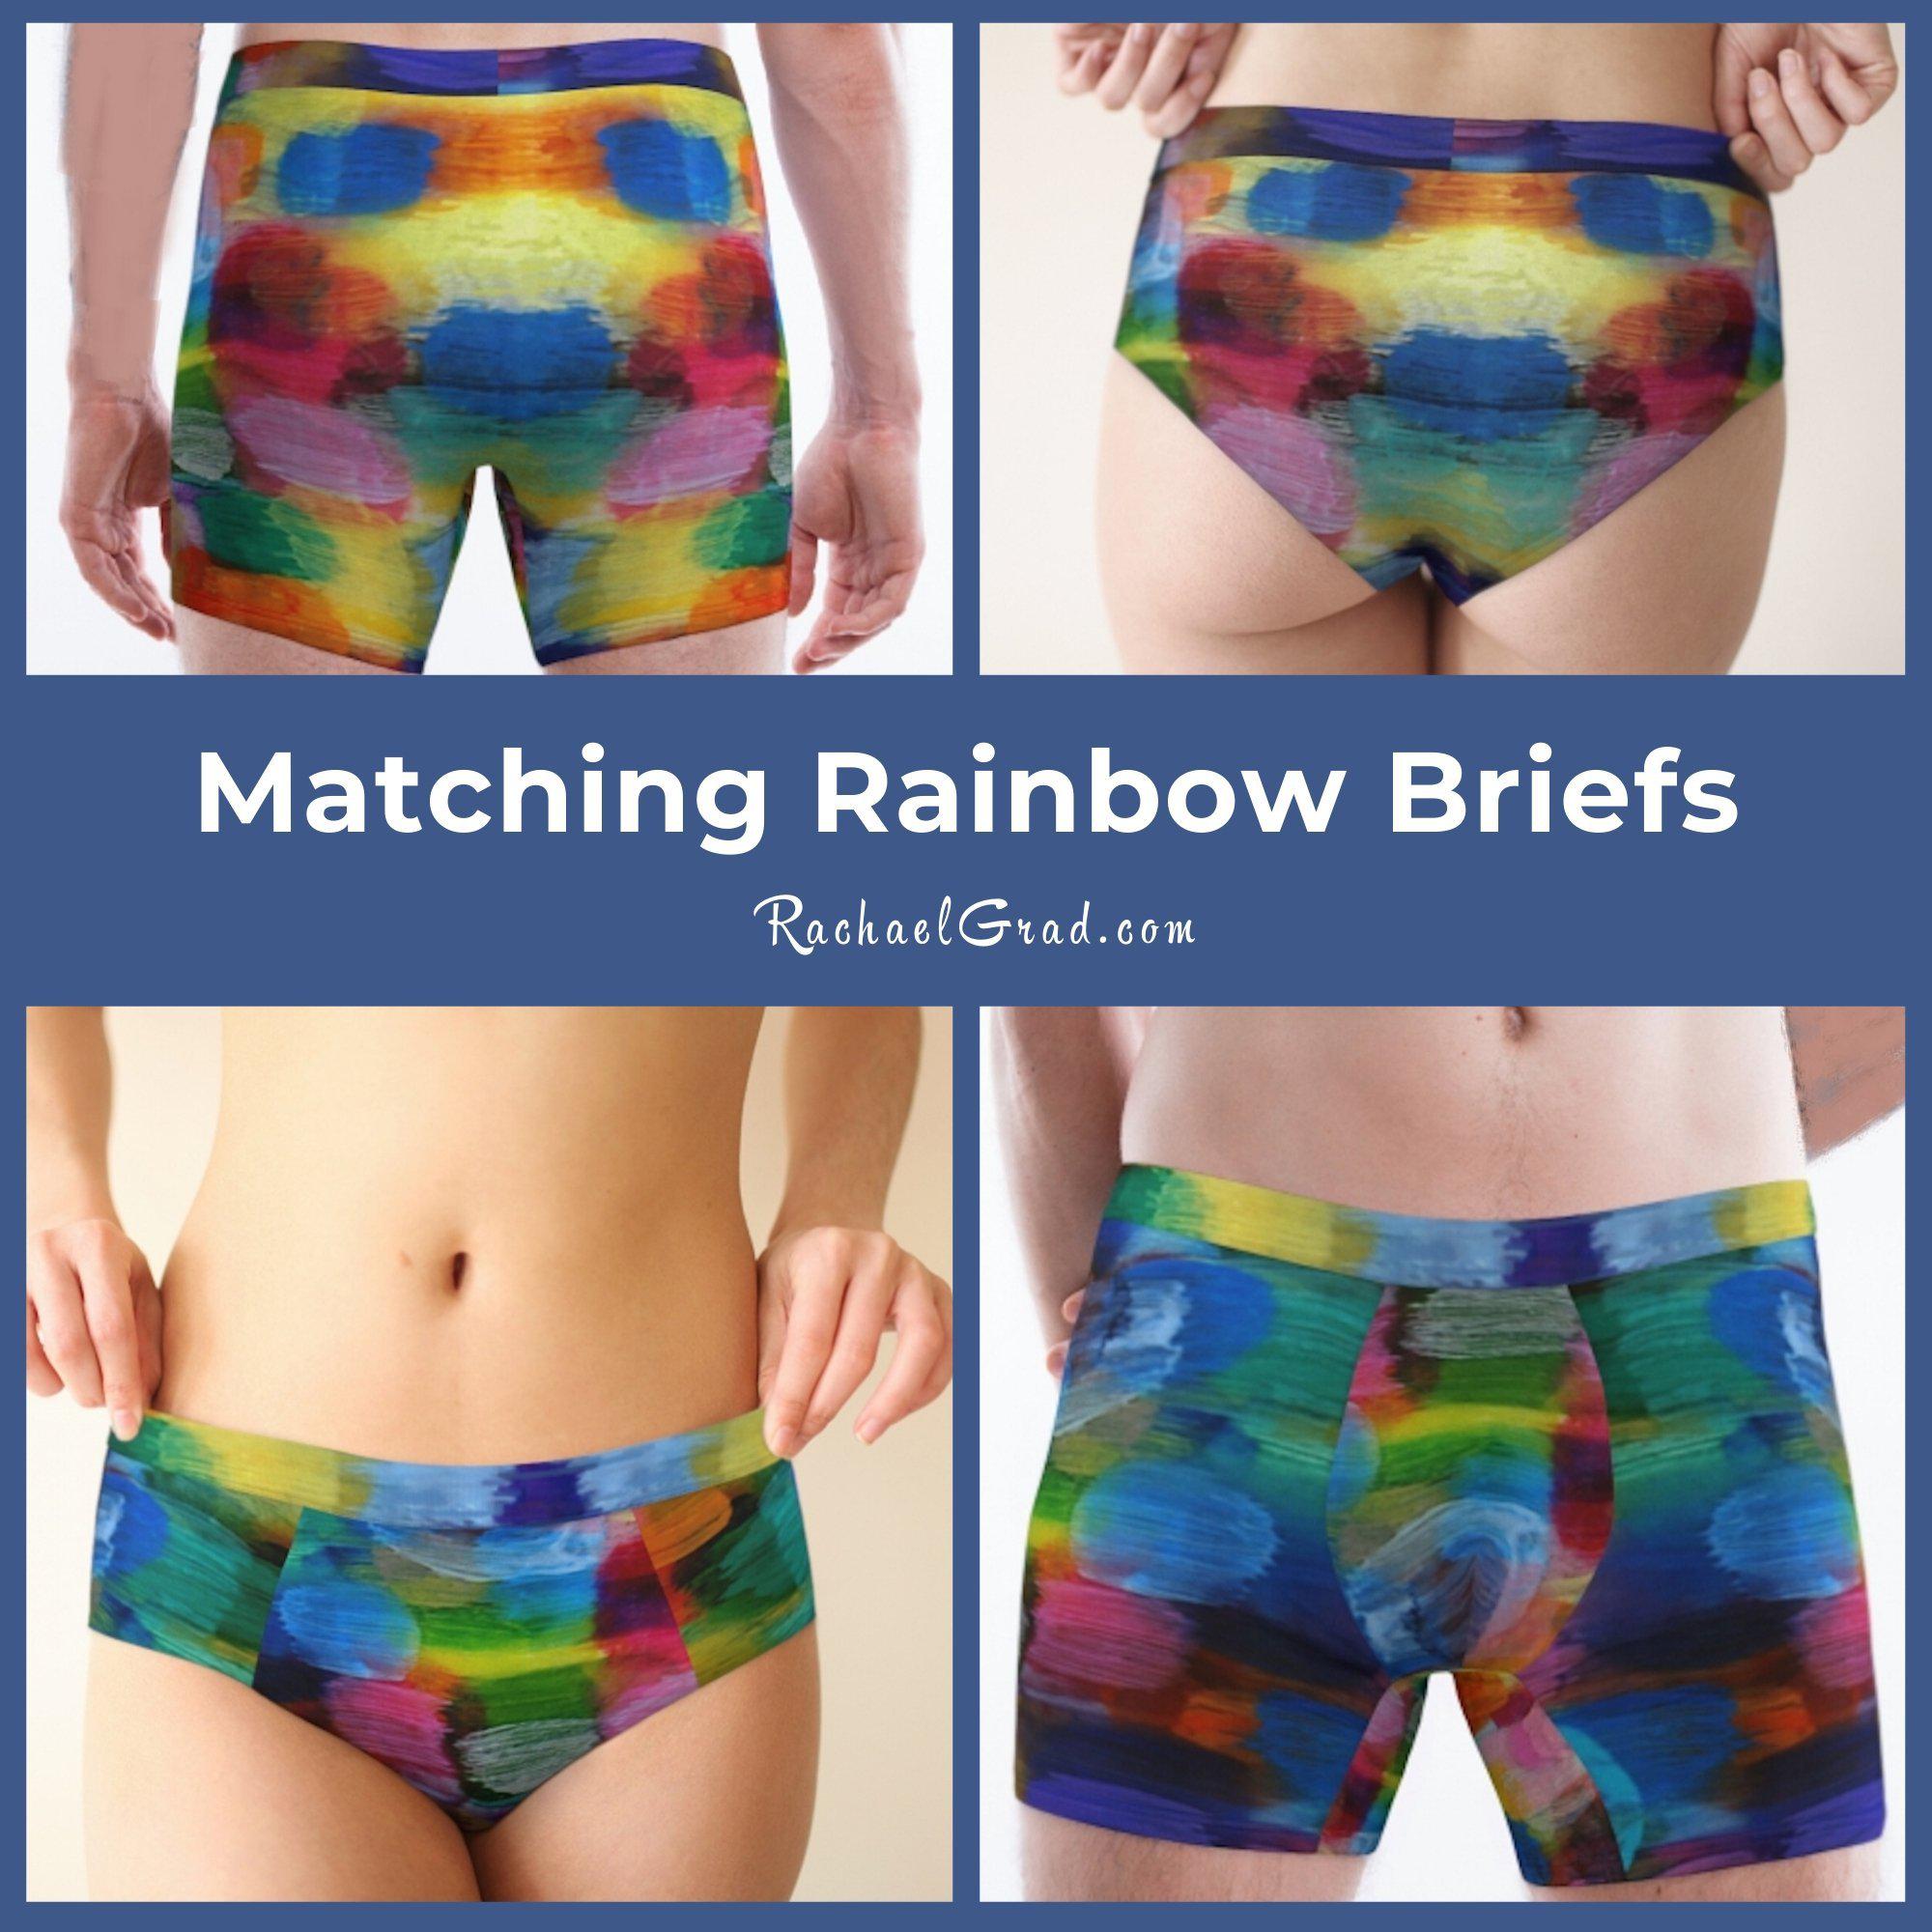 Matching Underwear Set Rainbow Colors Art, Toronto Artist Rachael Grad